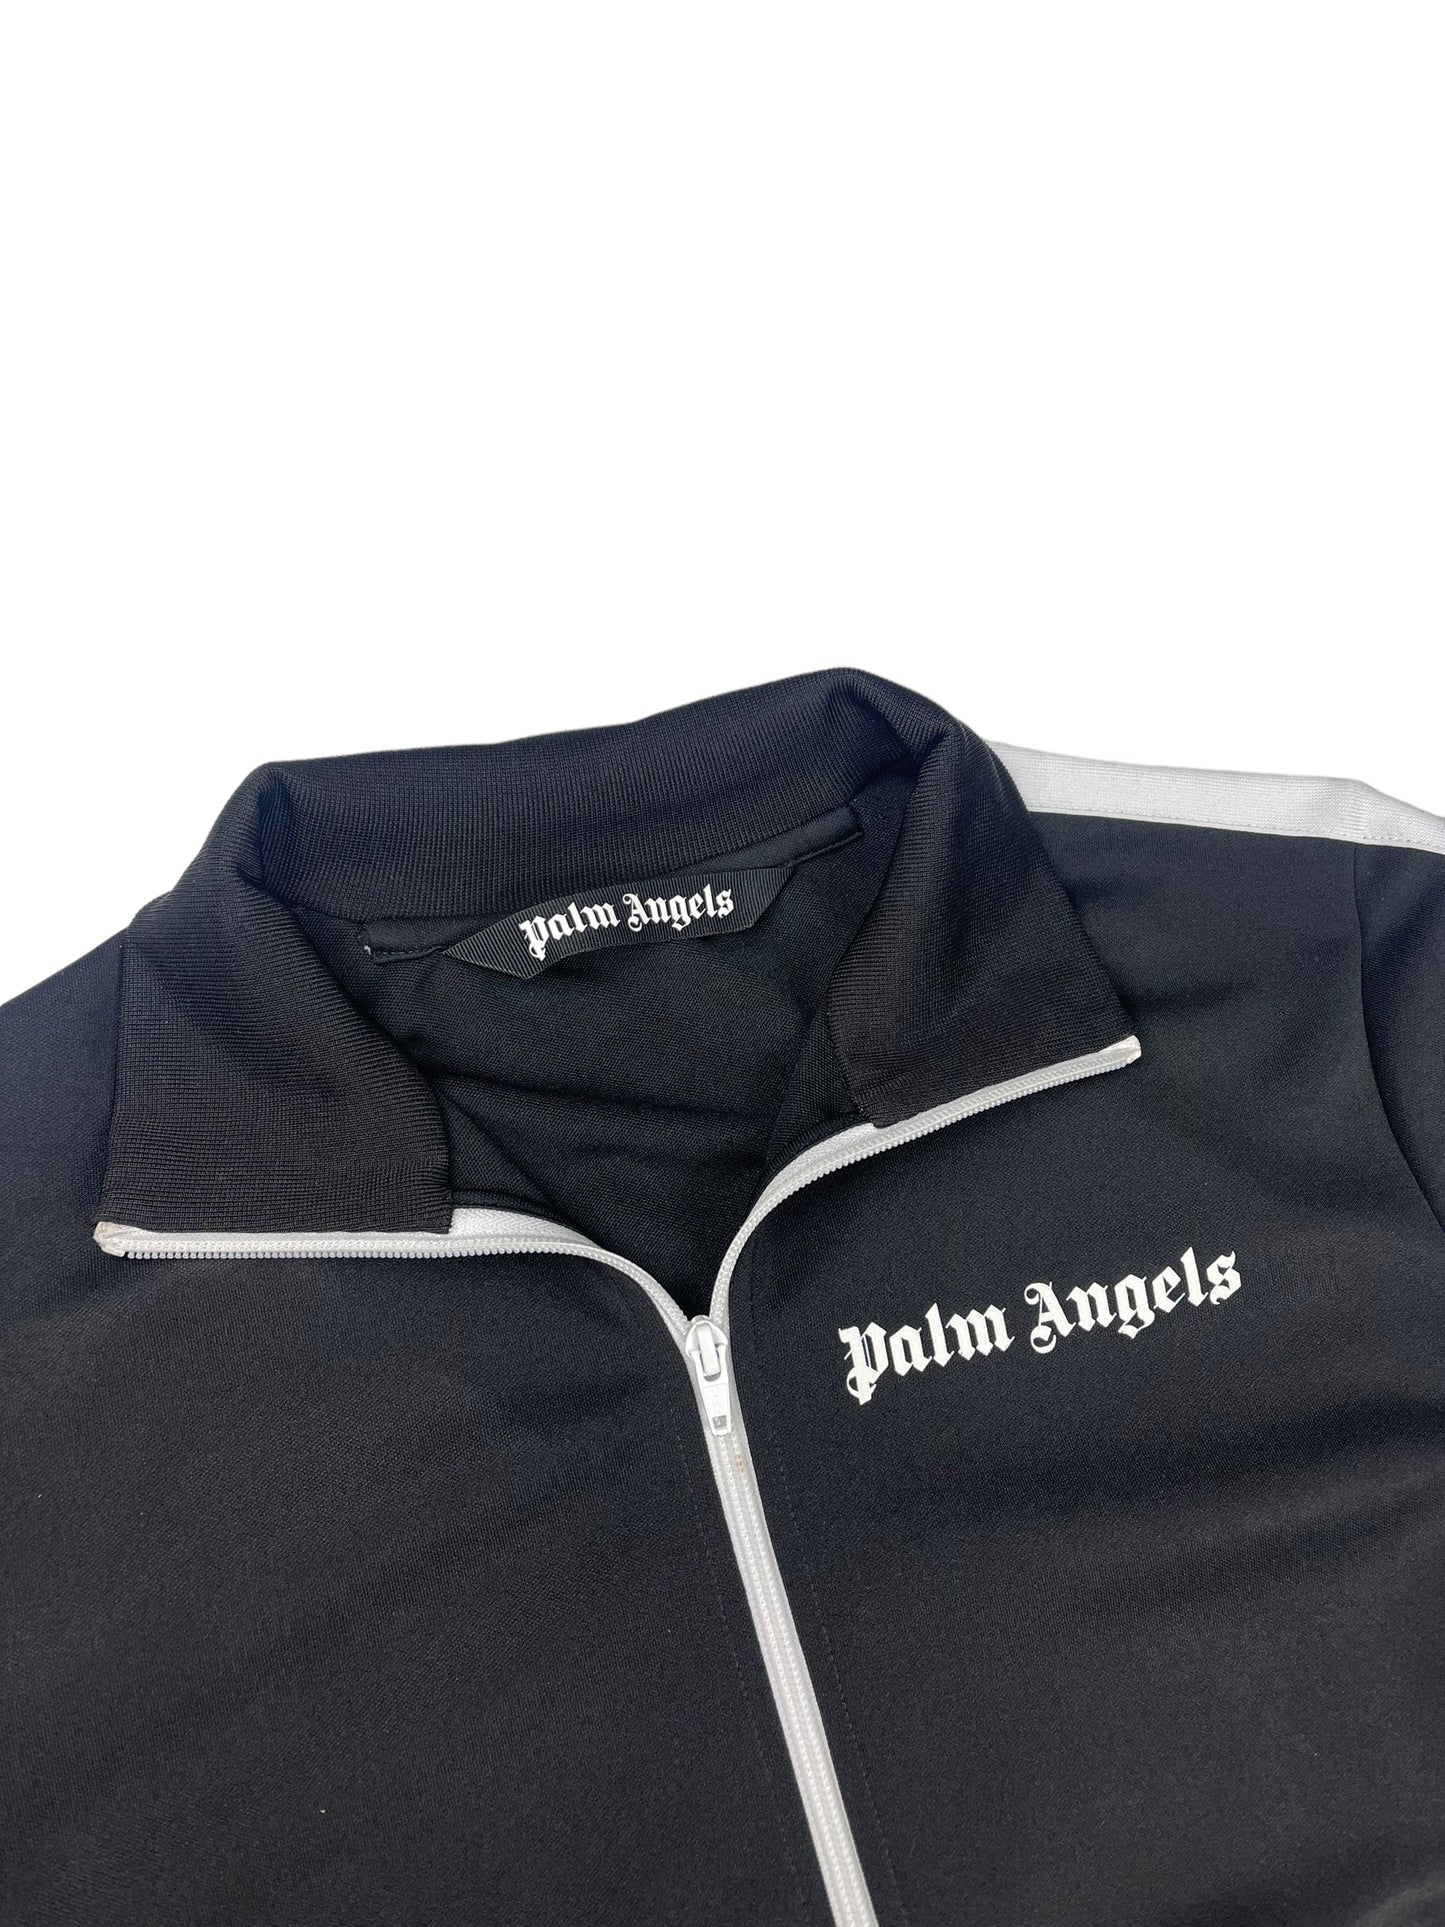 Palm angels black tracksuit jacket – GizmoGarms